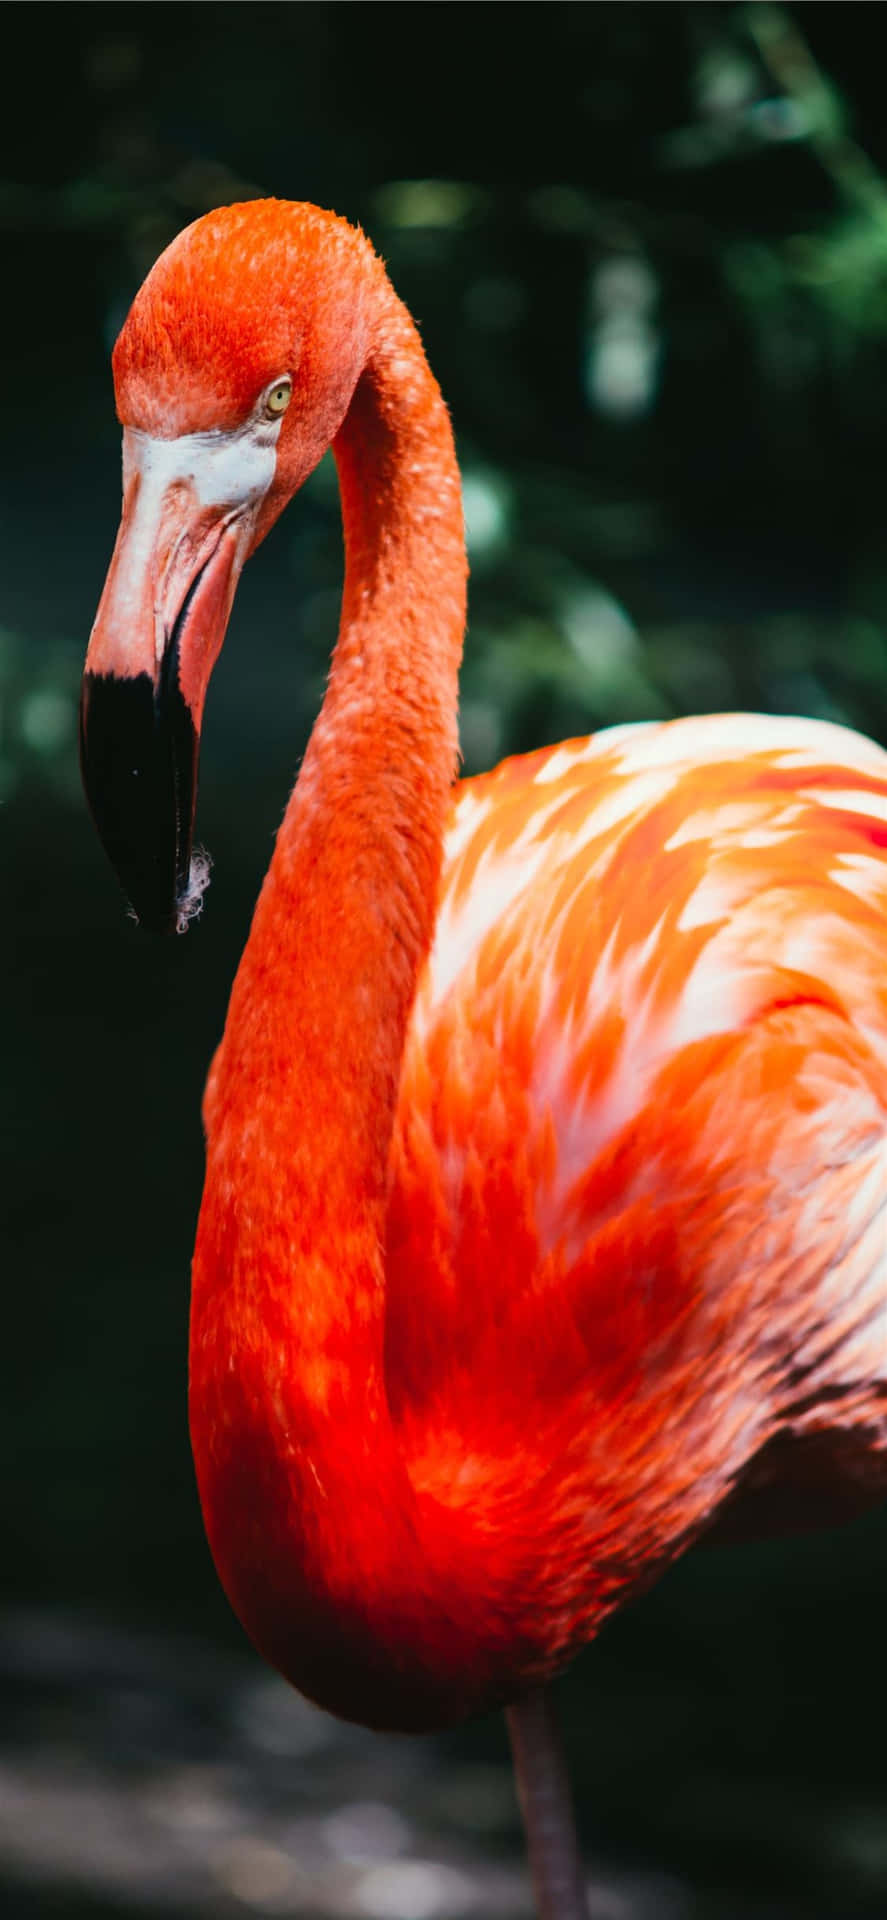 Stunning flamingo adorns an iphone Wallpaper